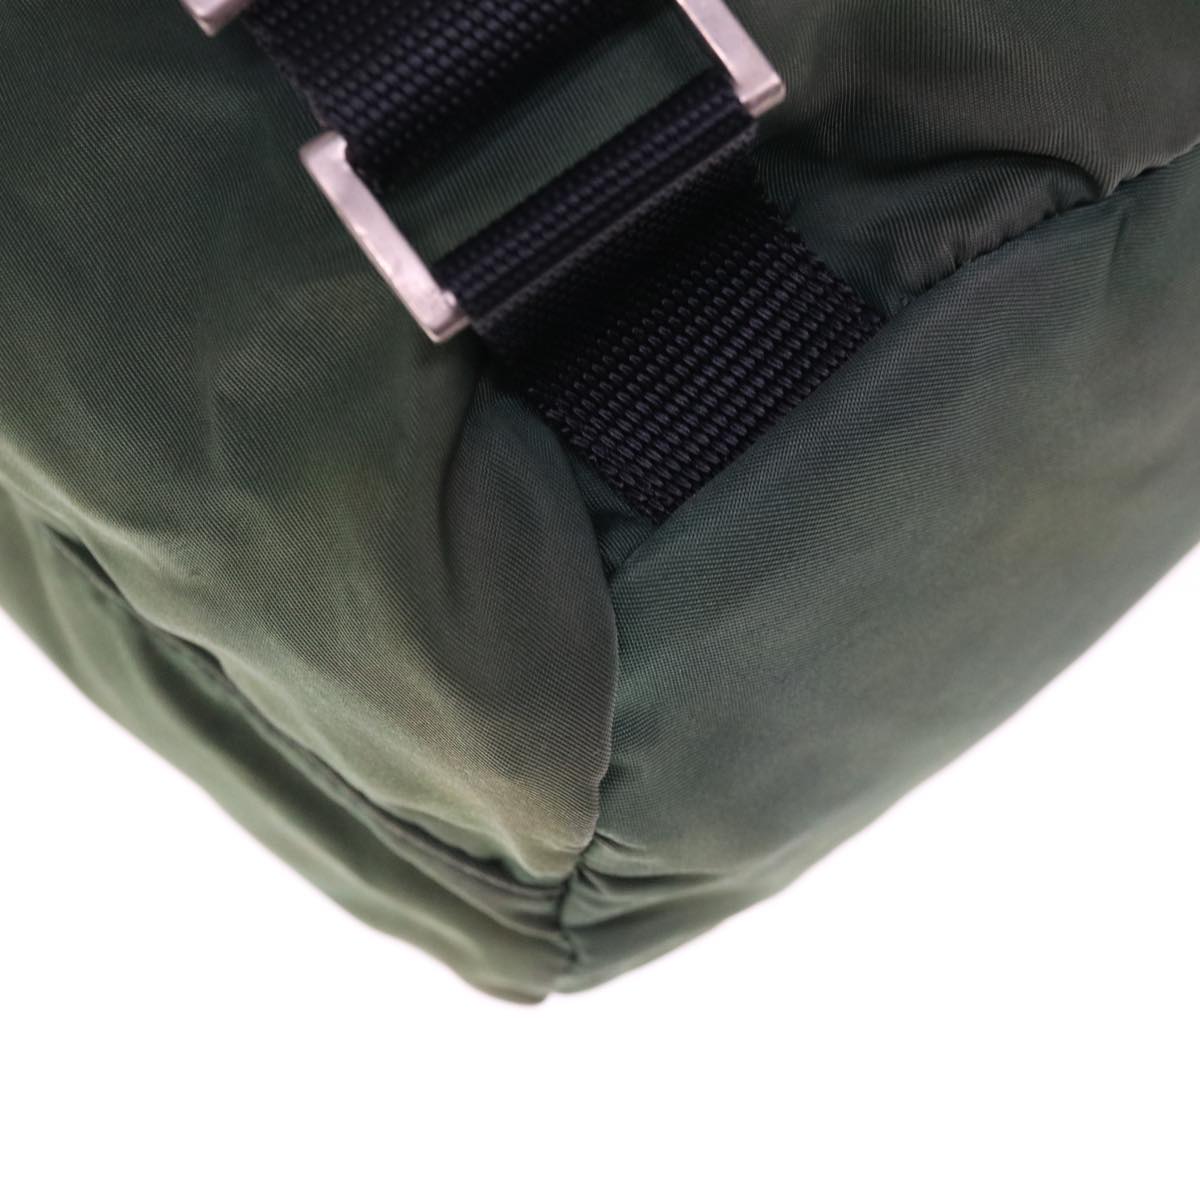 PRADA Backpack Nylon Green Auth 66140